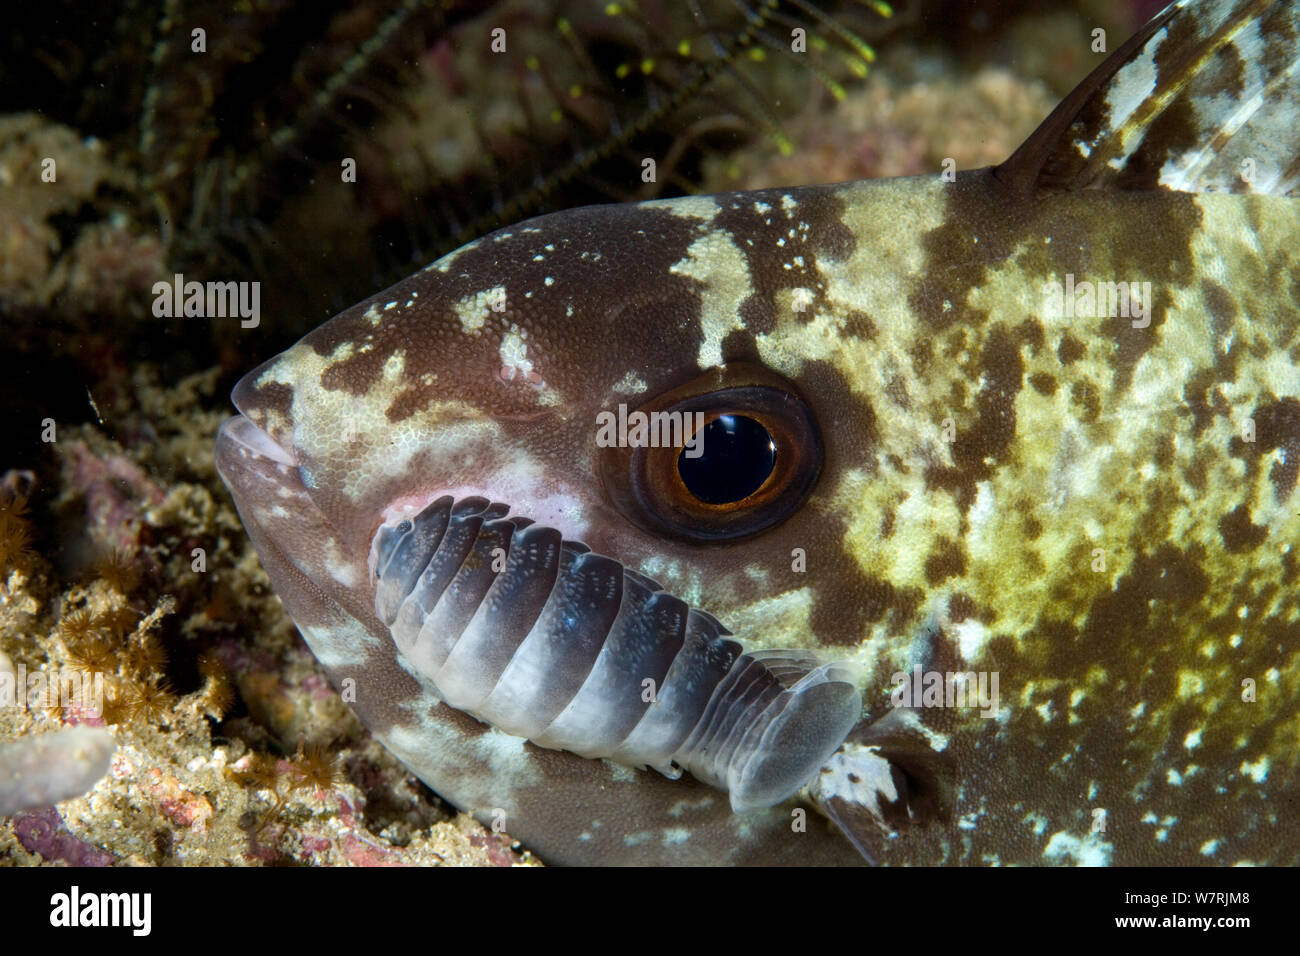 Fish with with isopod parasites (Nerocila sp.) Raja Ampat, Irian Jaya, West Papua, Indonesia, Pacific Ocean Stock Photo